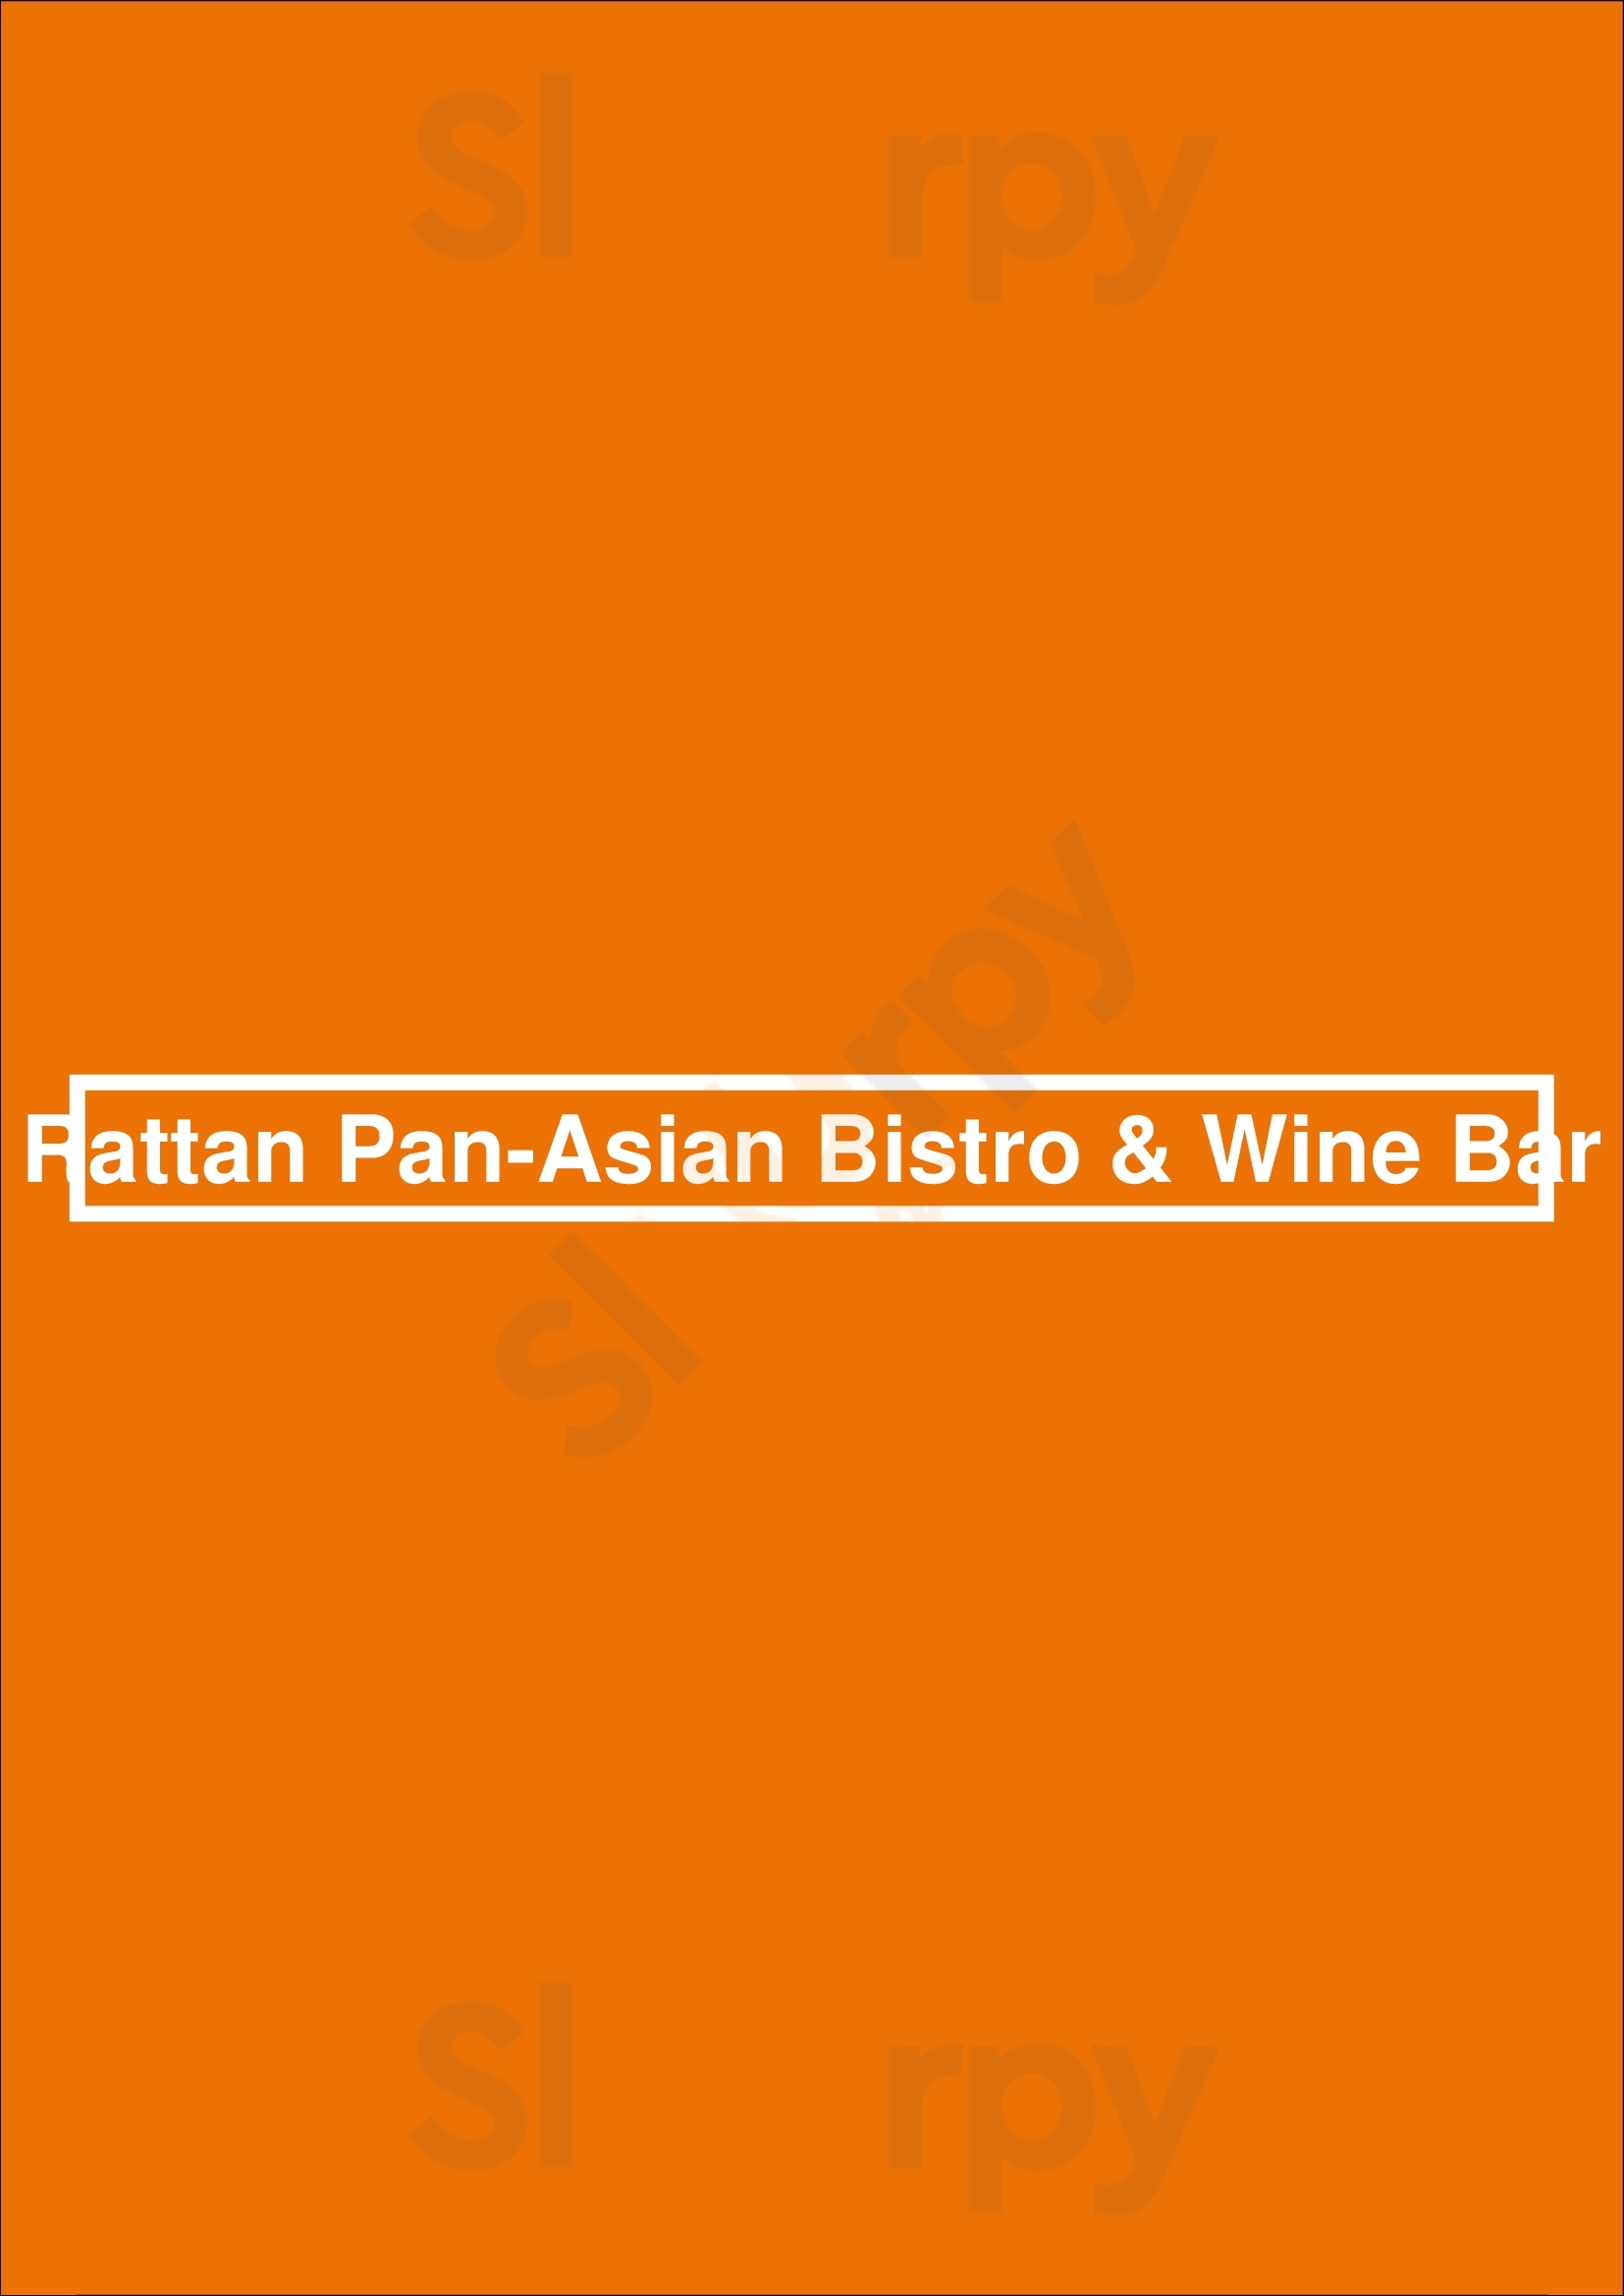 Rattan Pan-asian Bistro & Wine Bar Houston Menu - 1